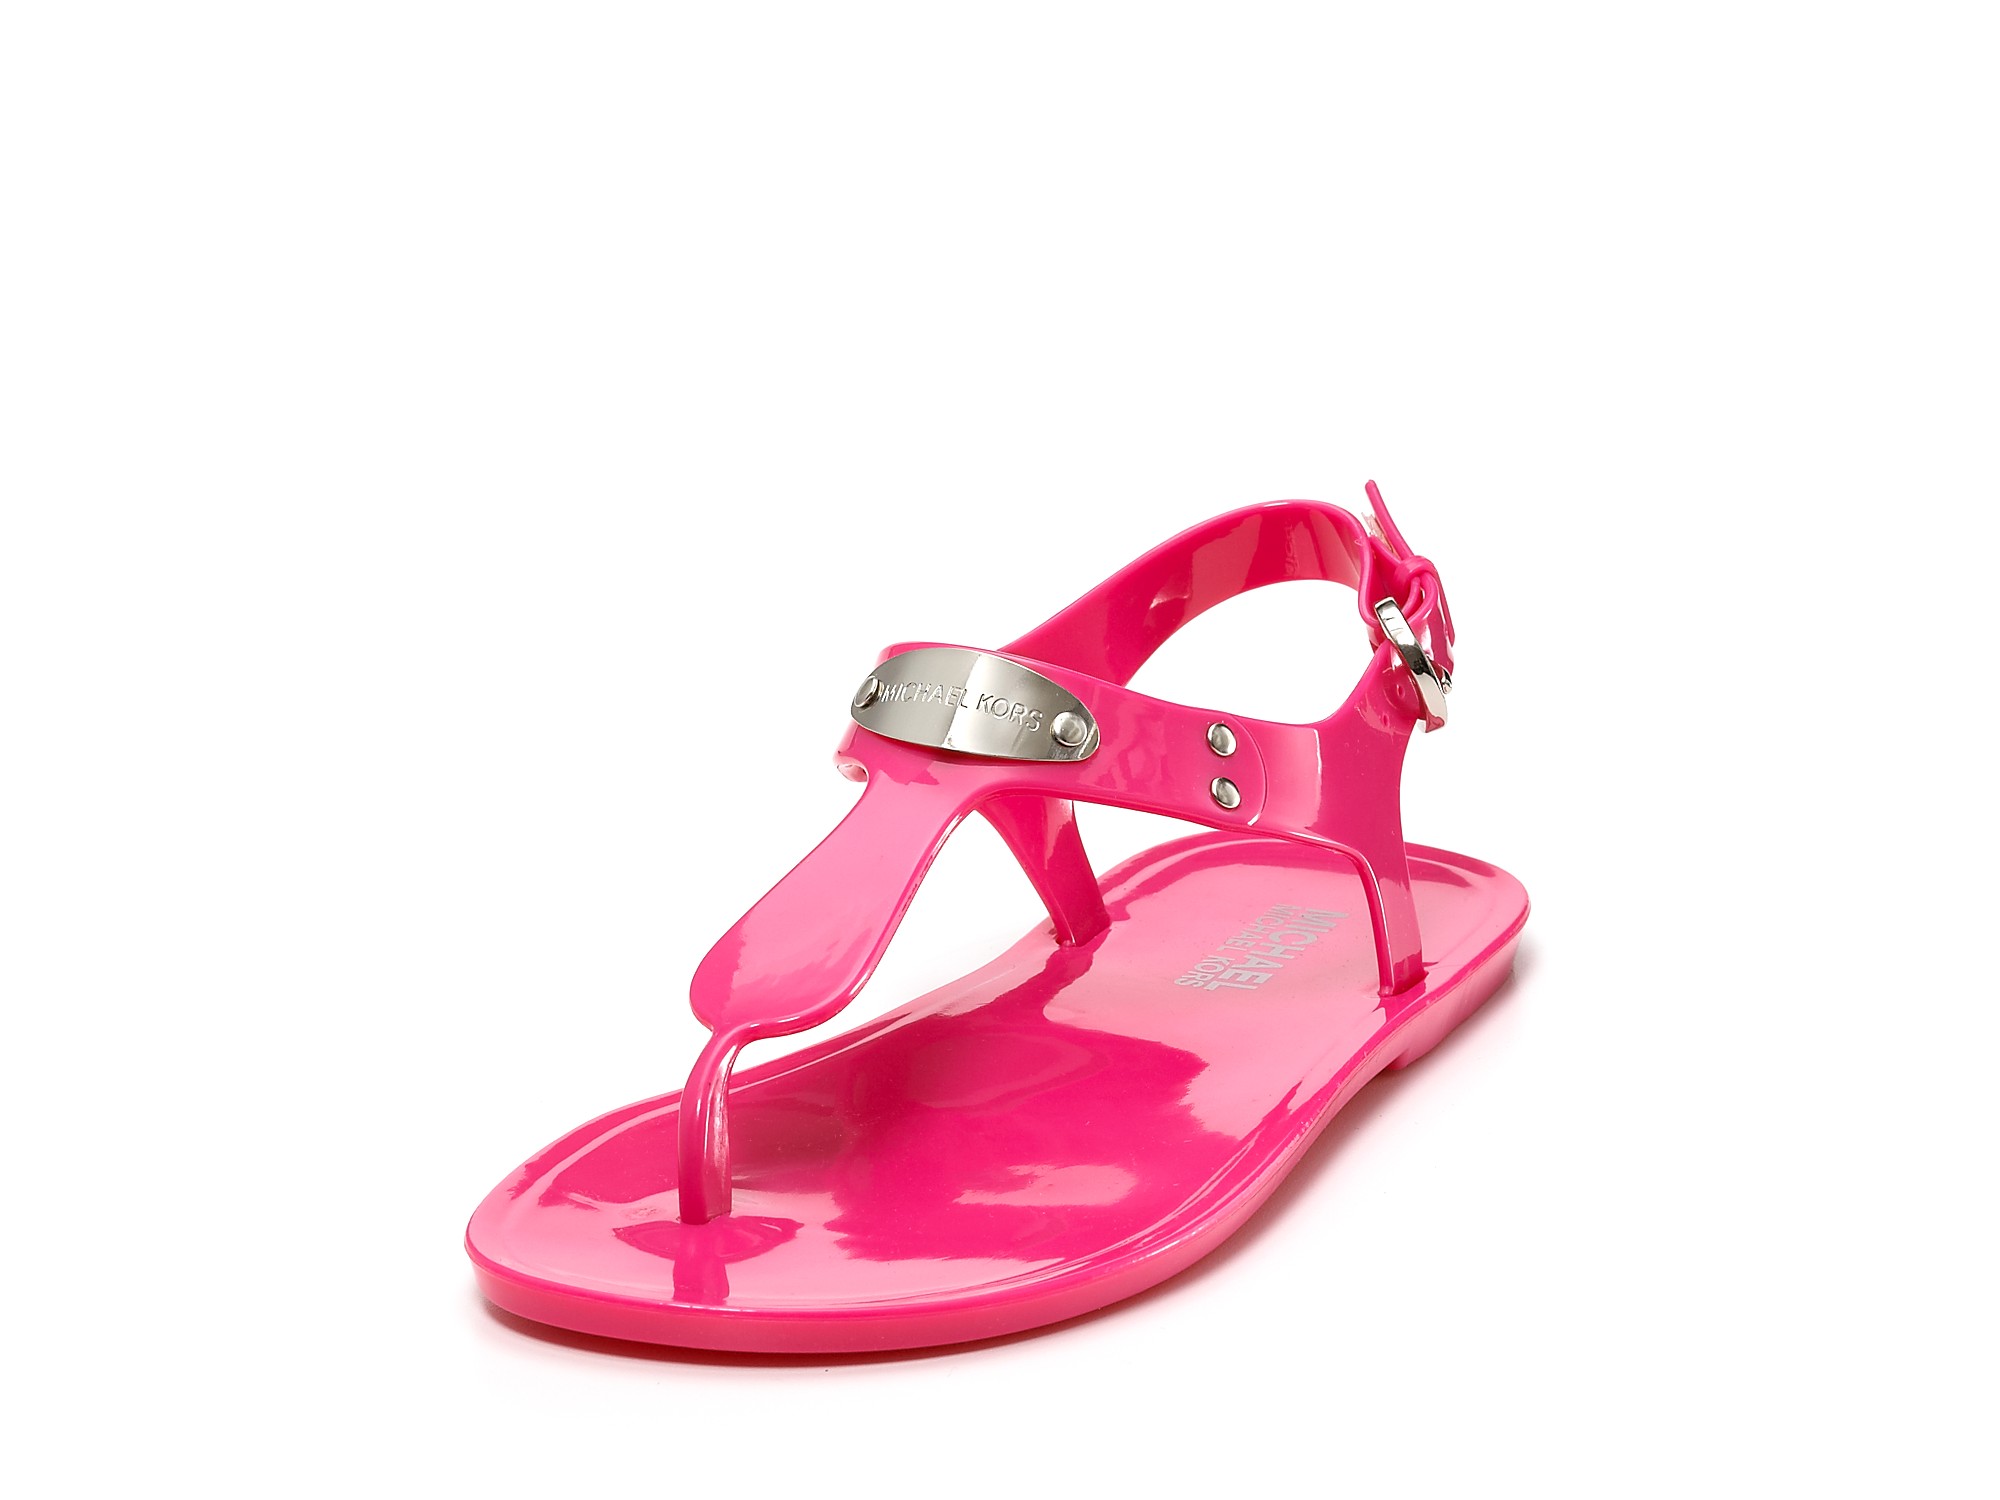 Michael Kors Summer Sandals Flash Sales, 54% OFF | www.vetyvet.com